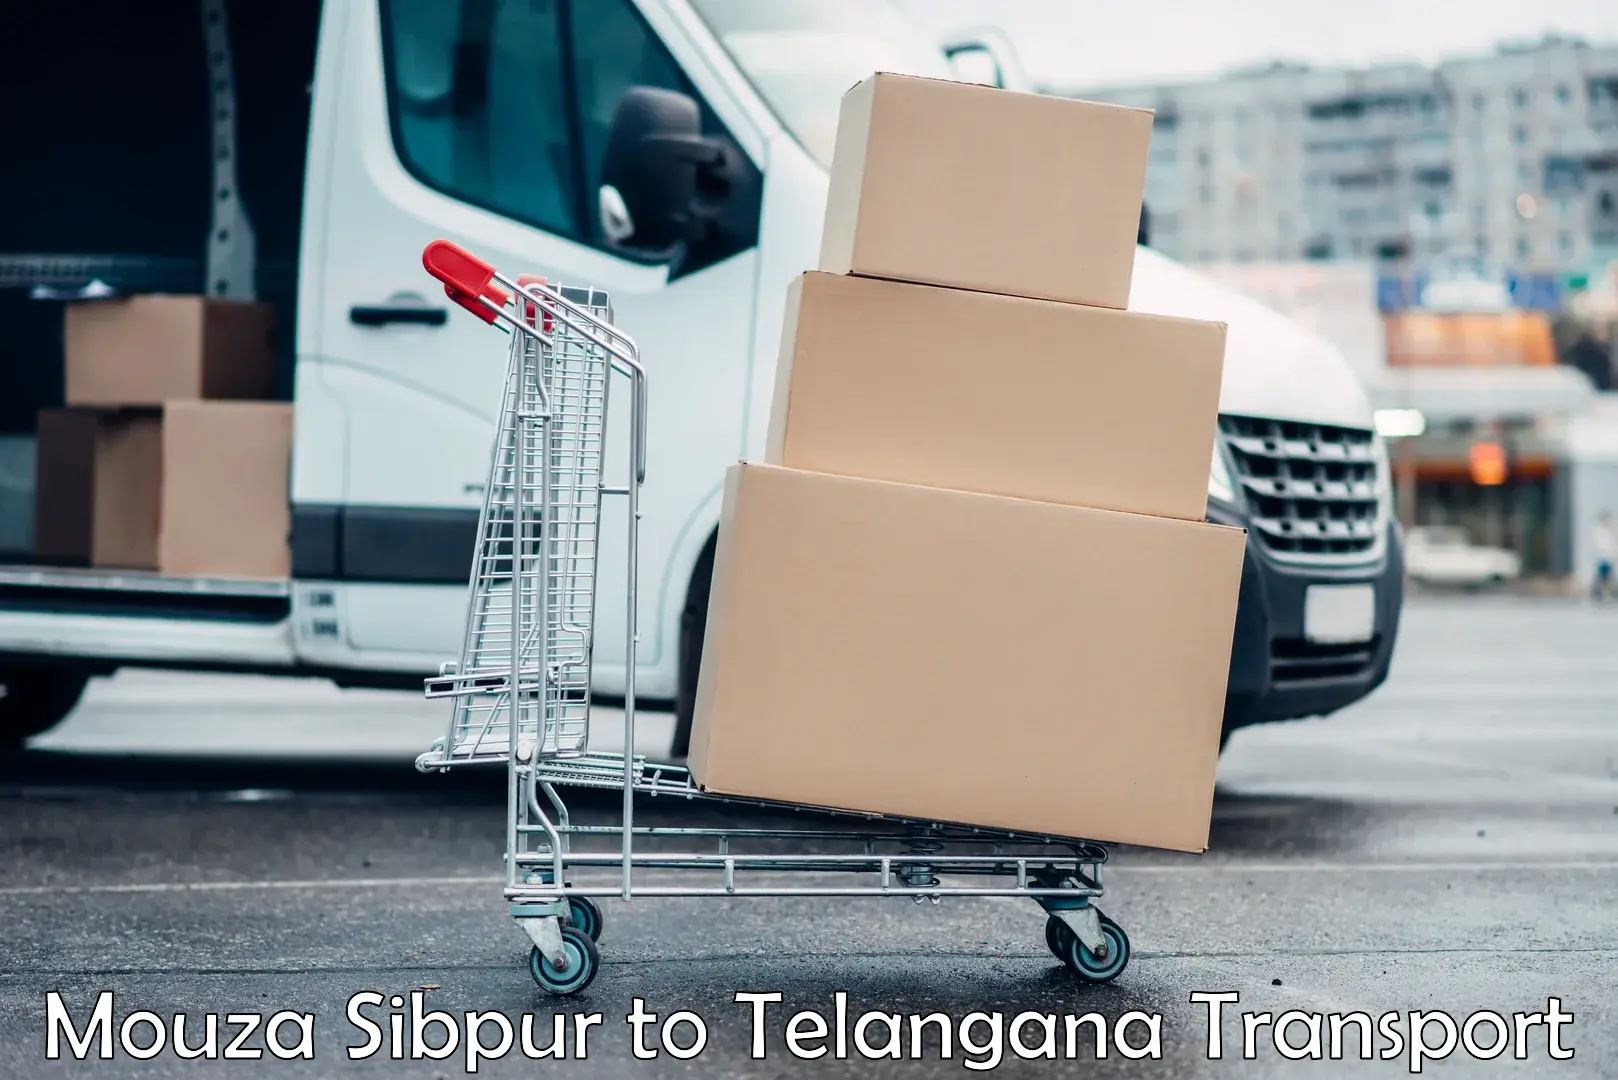 International cargo transportation services Mouza Sibpur to Manneguda